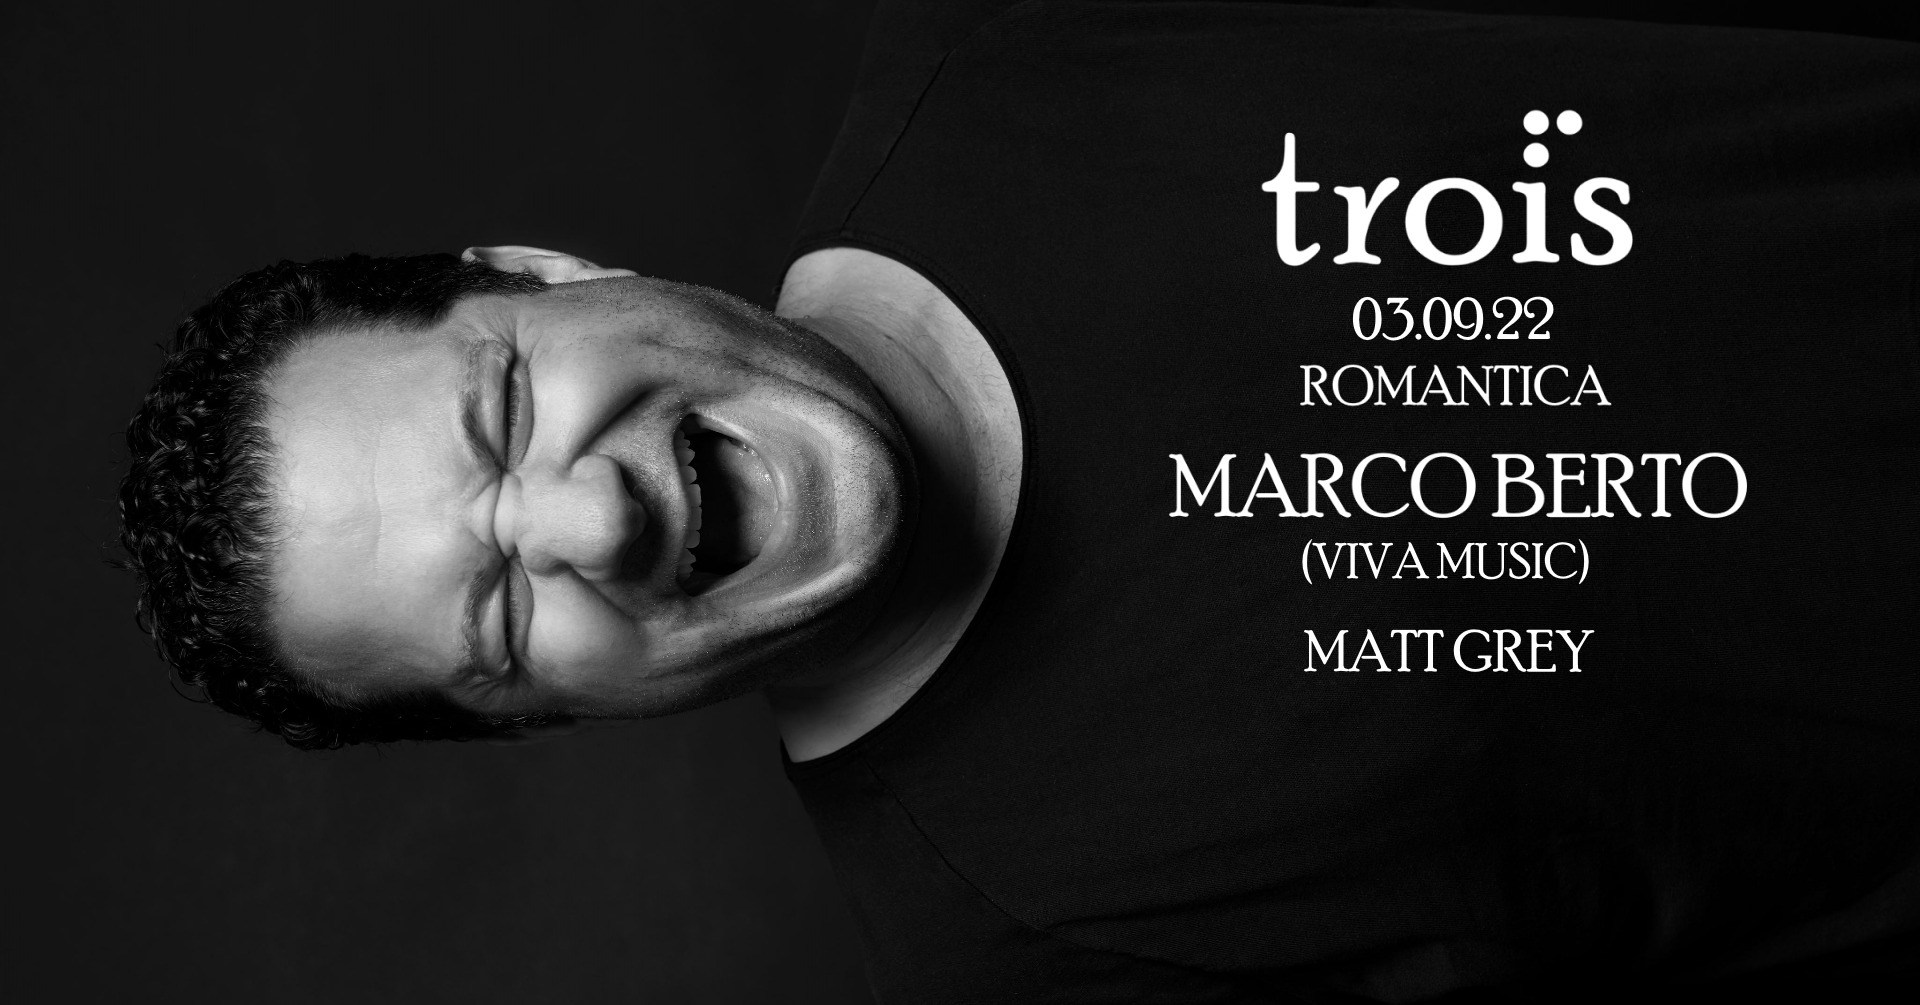 Trois mit Marco Berto (Viva Music) - Flyer front